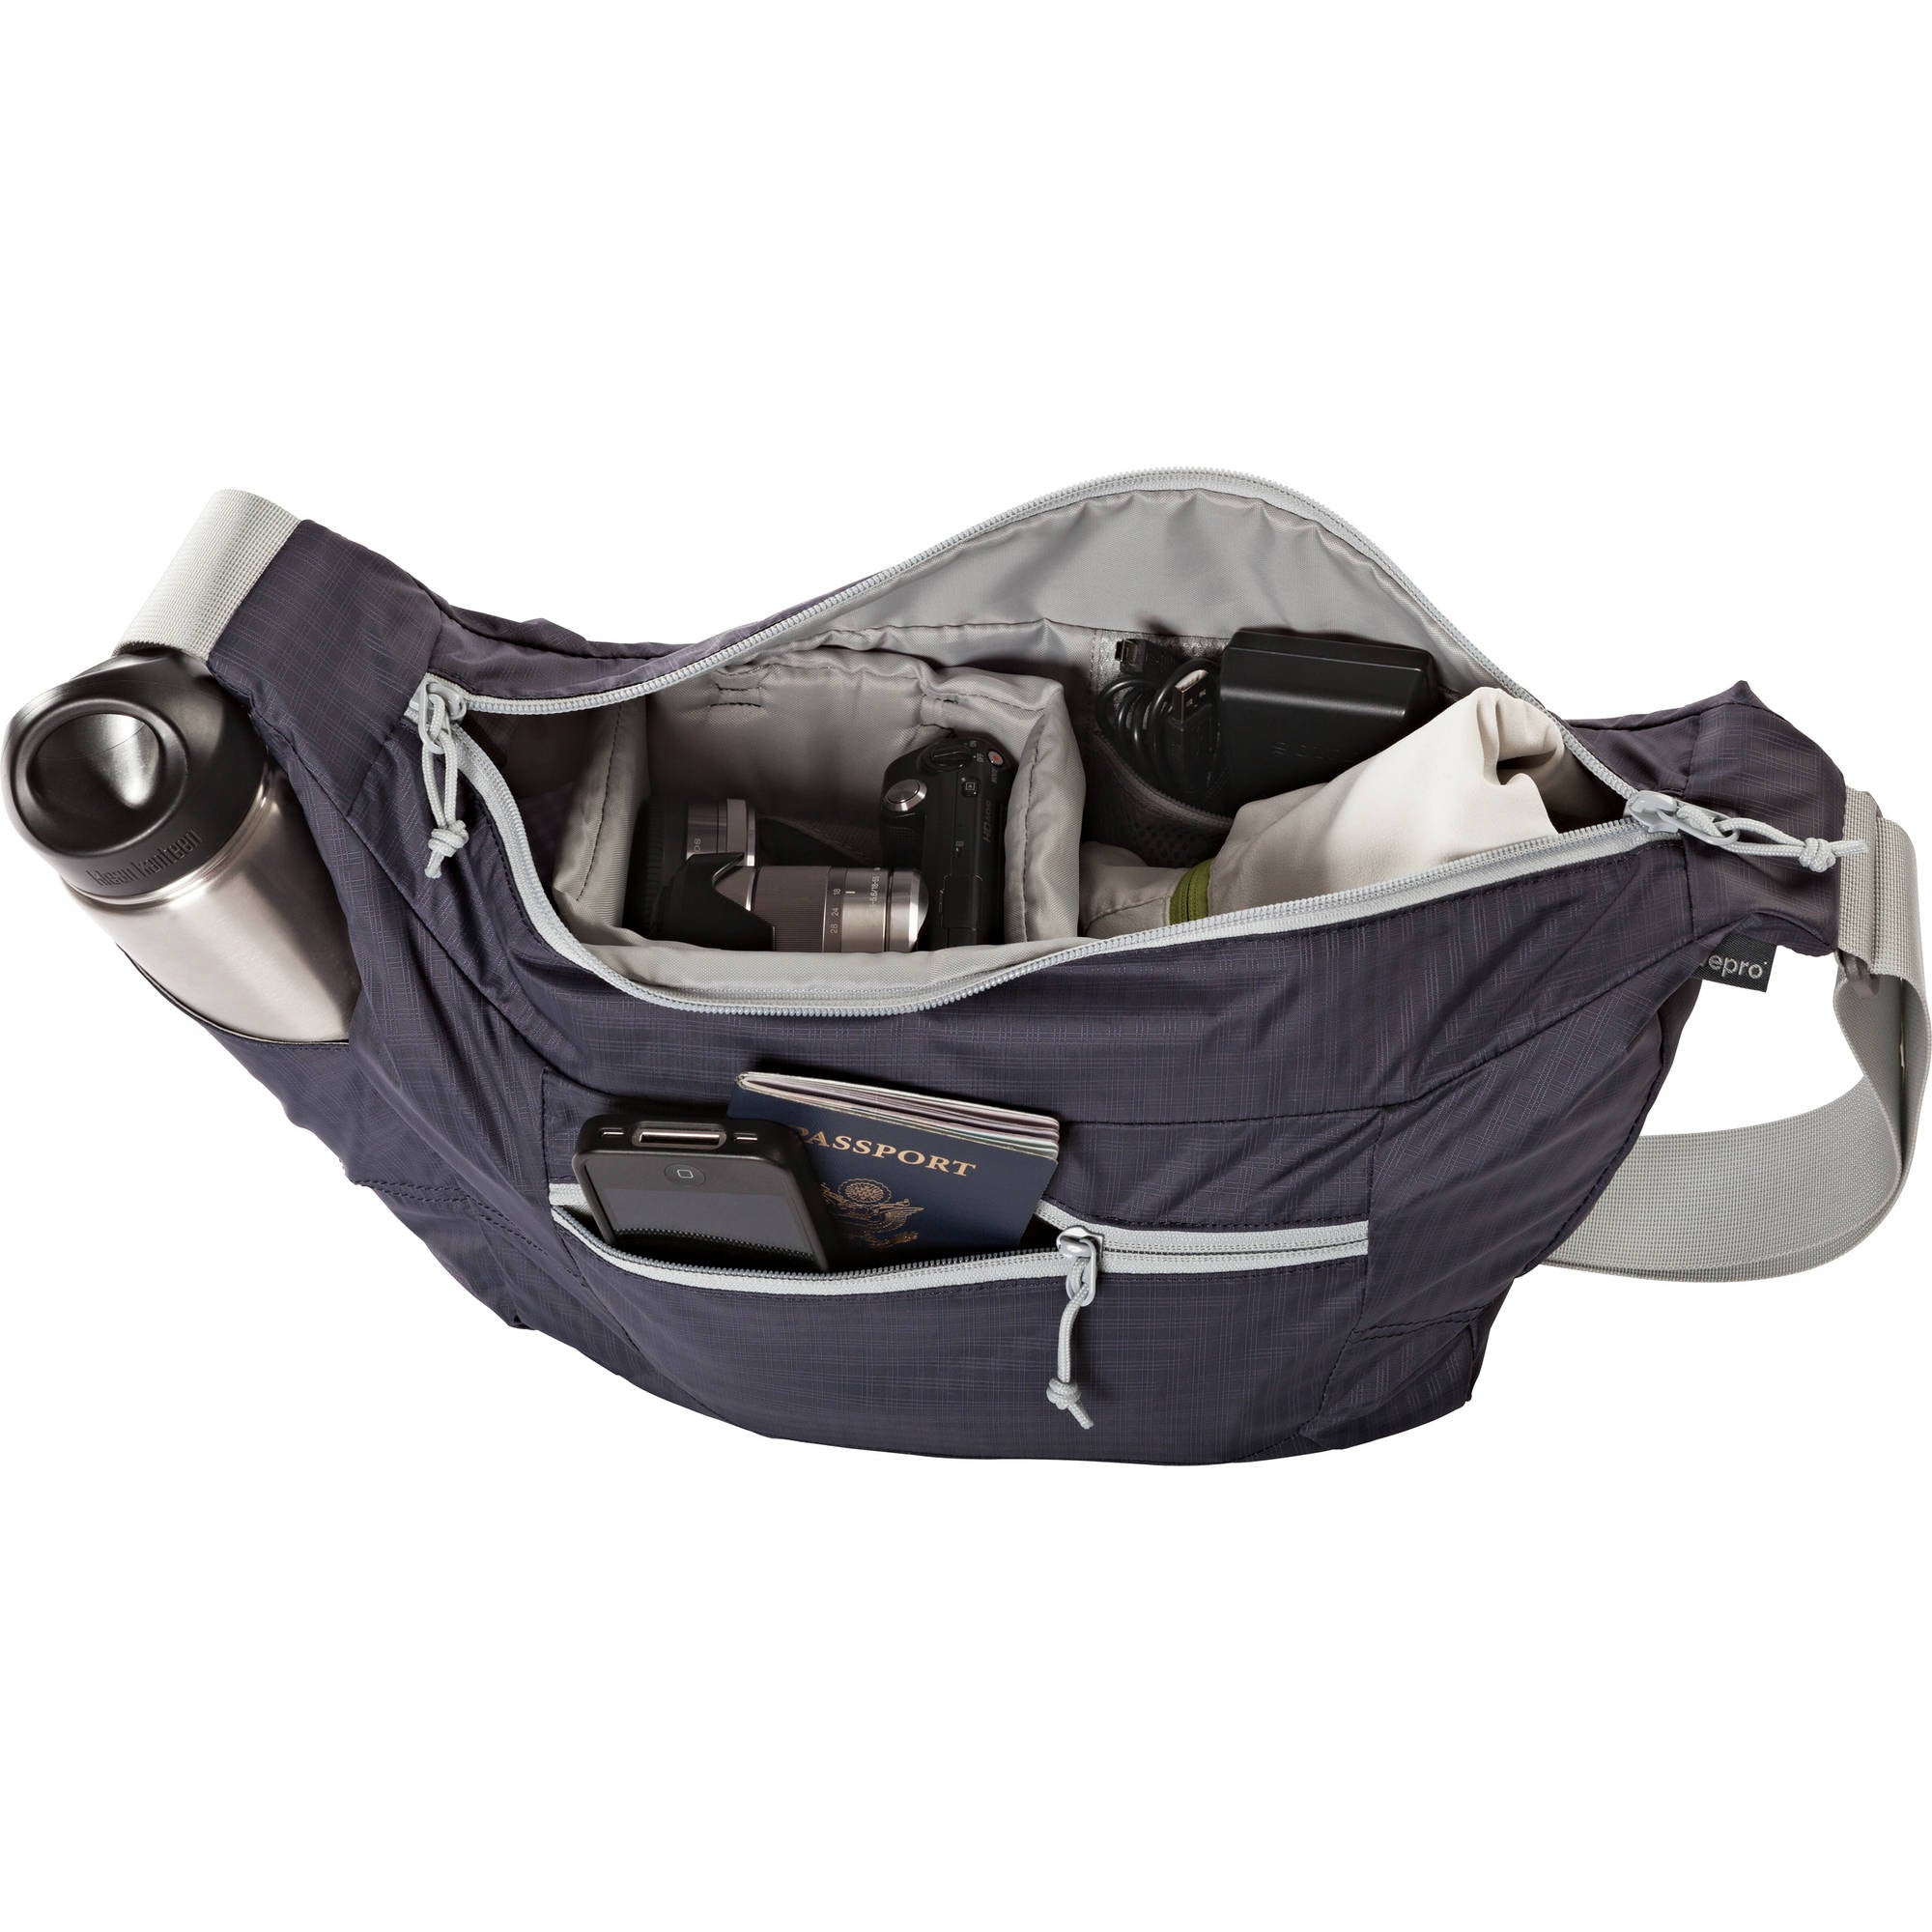 Lowepro Photo Sport Shoulder 12L Camera Bag (Purple/Grey), bags shoulder bags, Lowepro - Pictureline  - 8